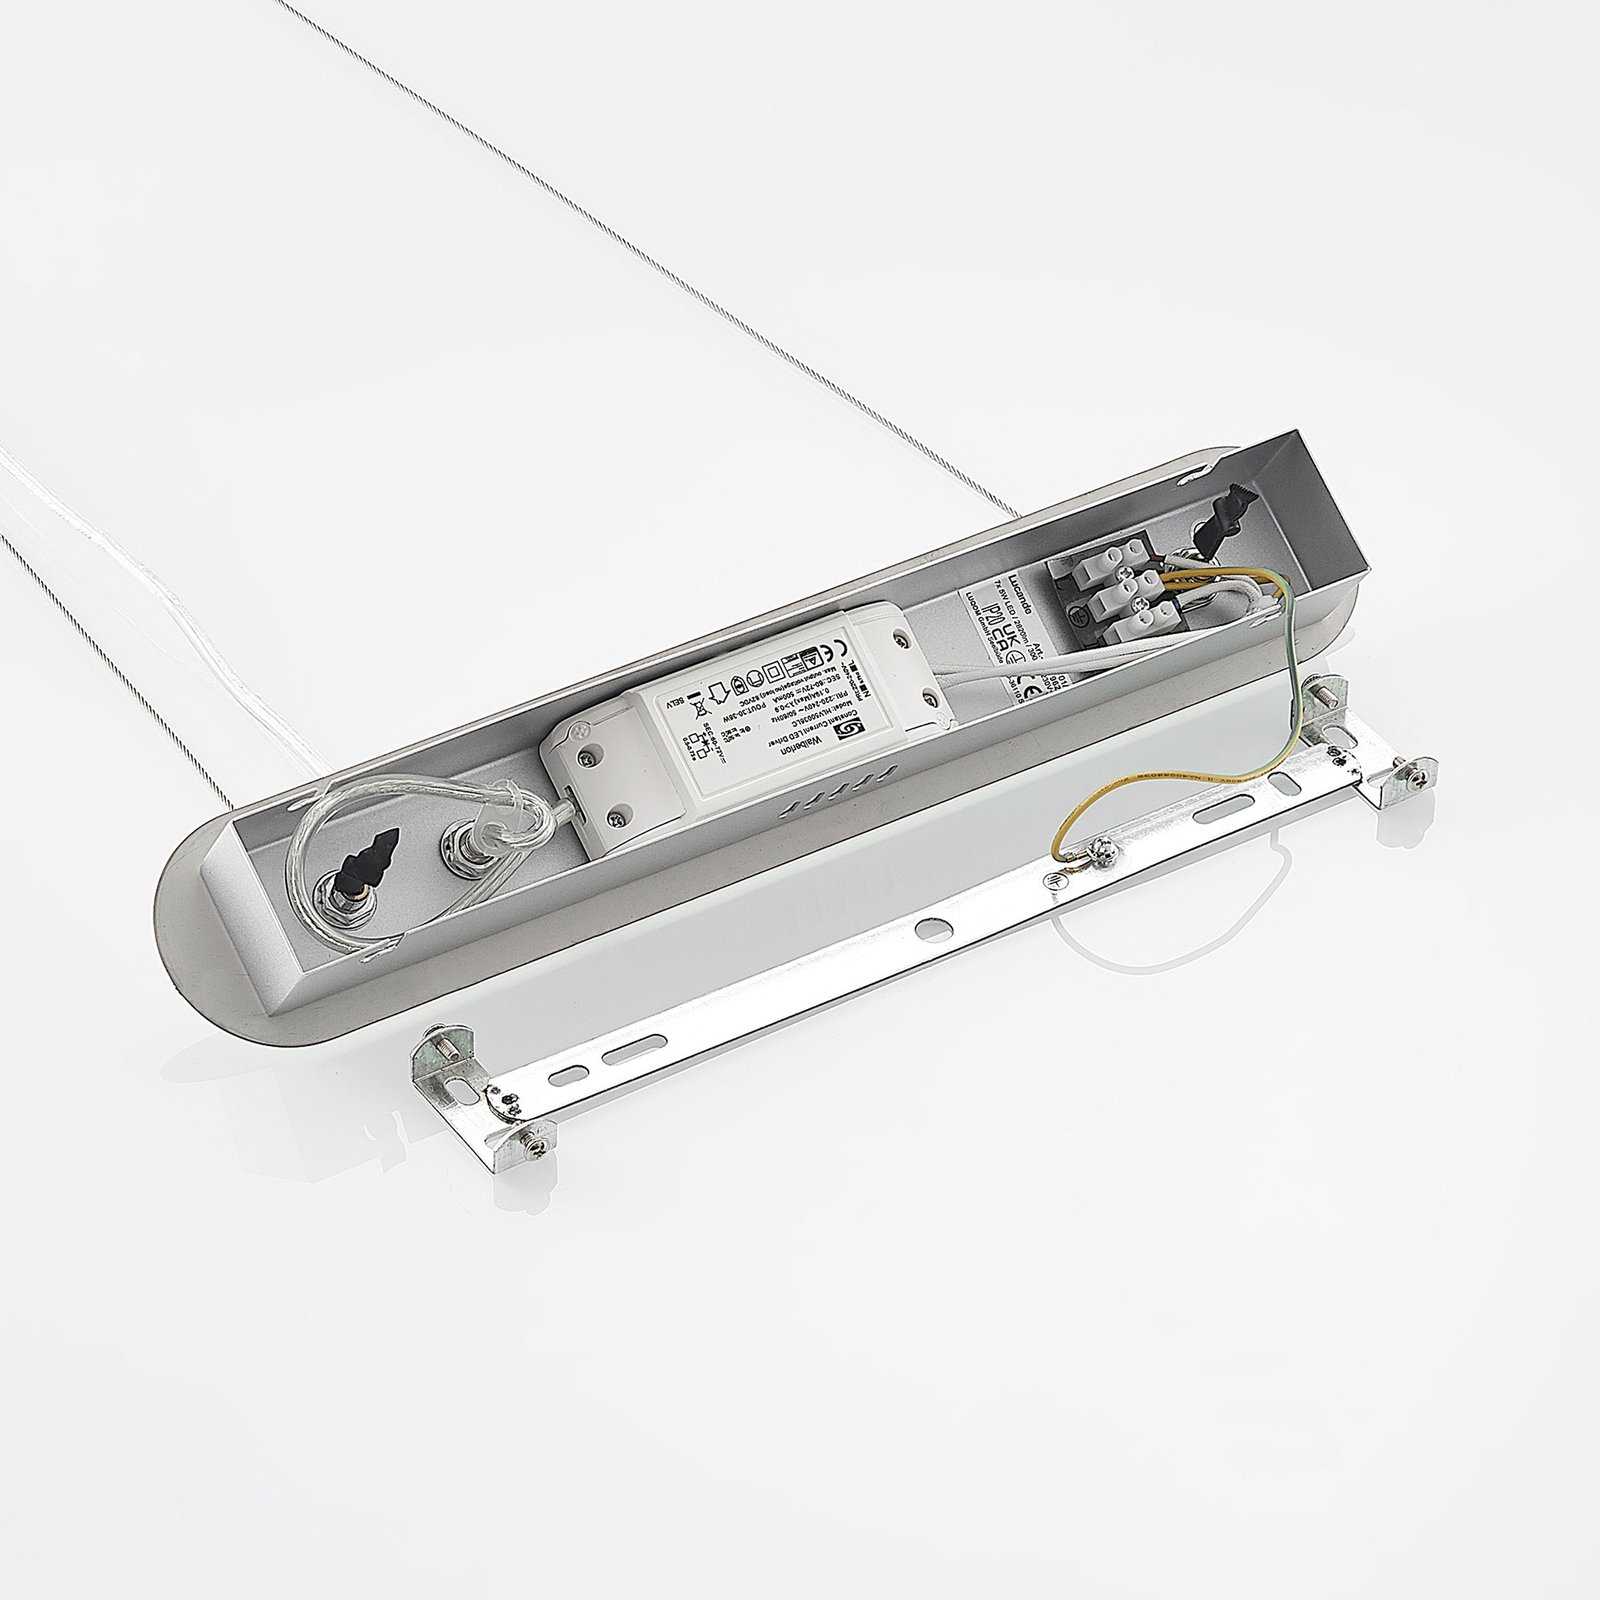 Lucande Kilio závesné LED svietidlo, 7-pl., chróm